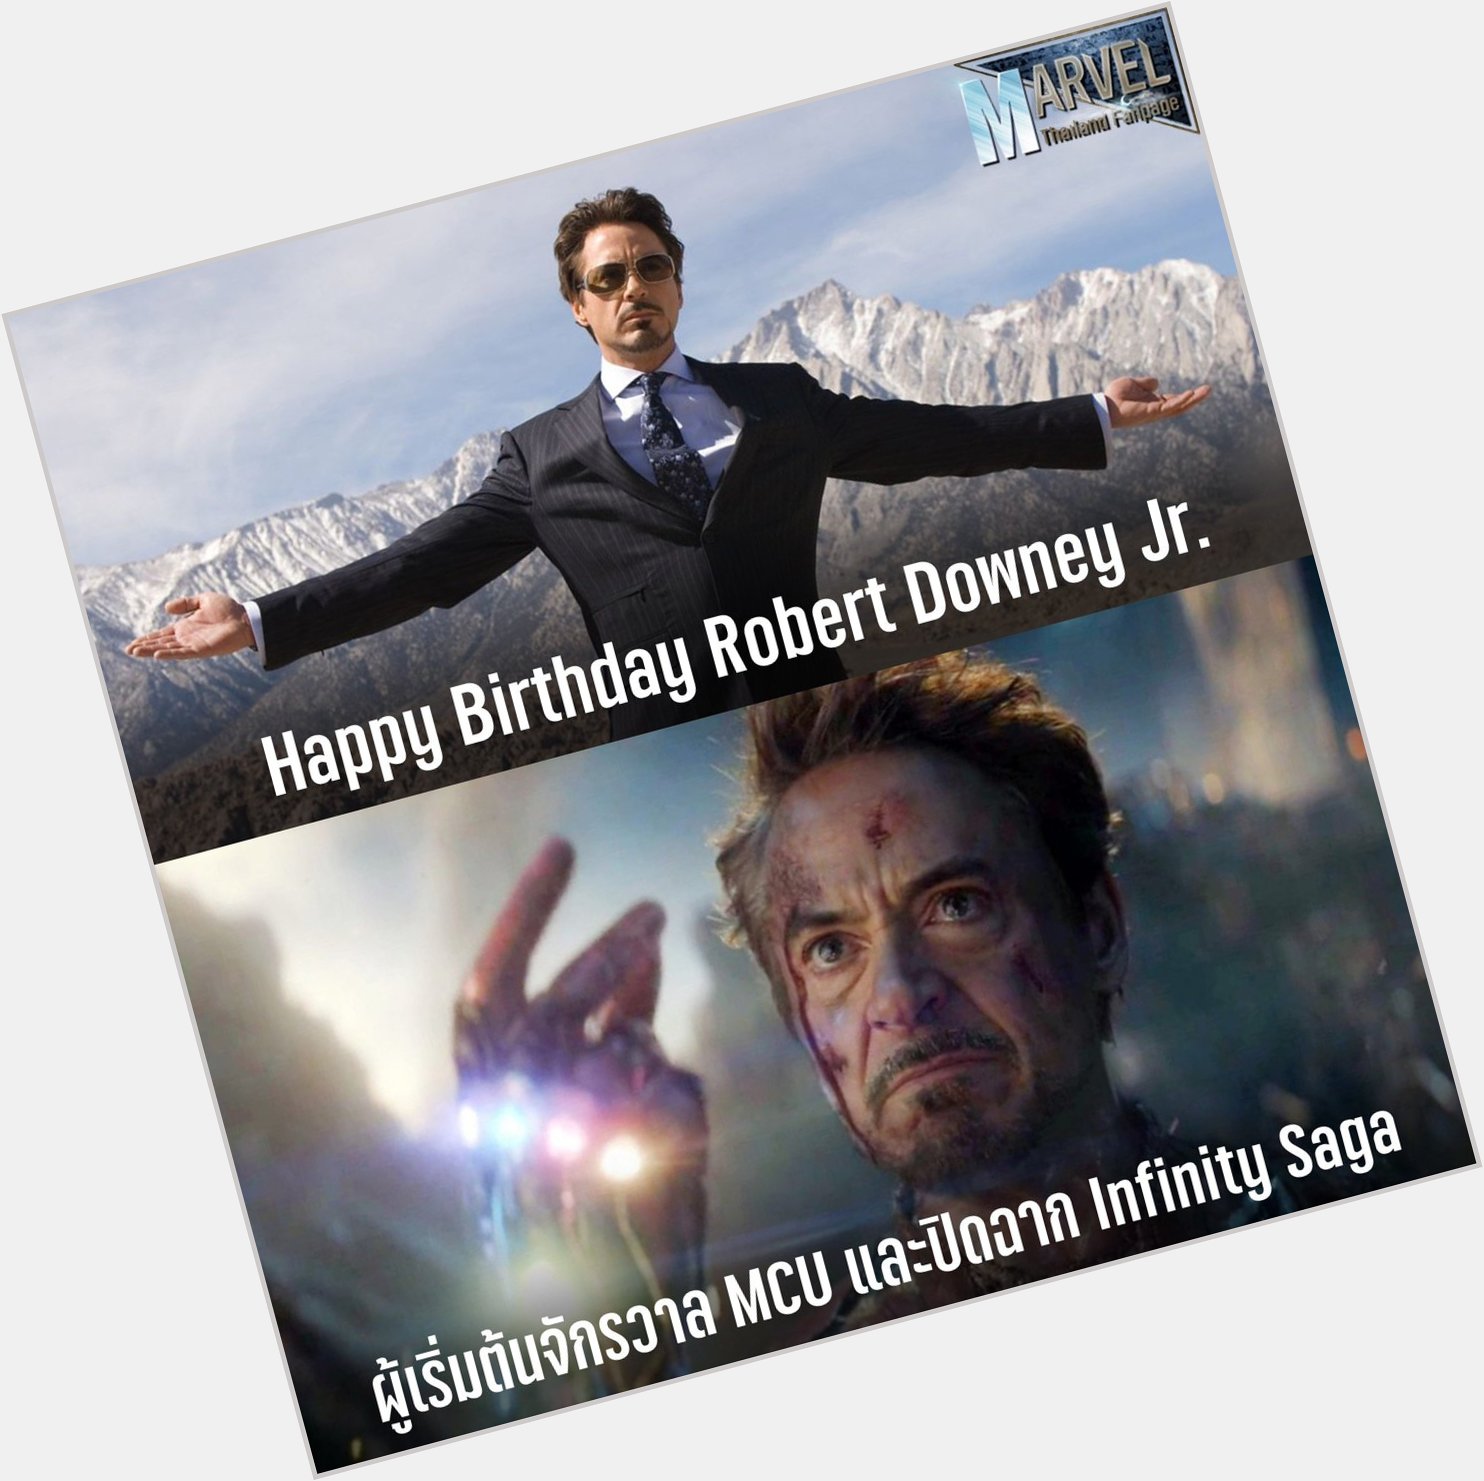 Happy Birthday Robert Downey Jr.

I love you 3000. 